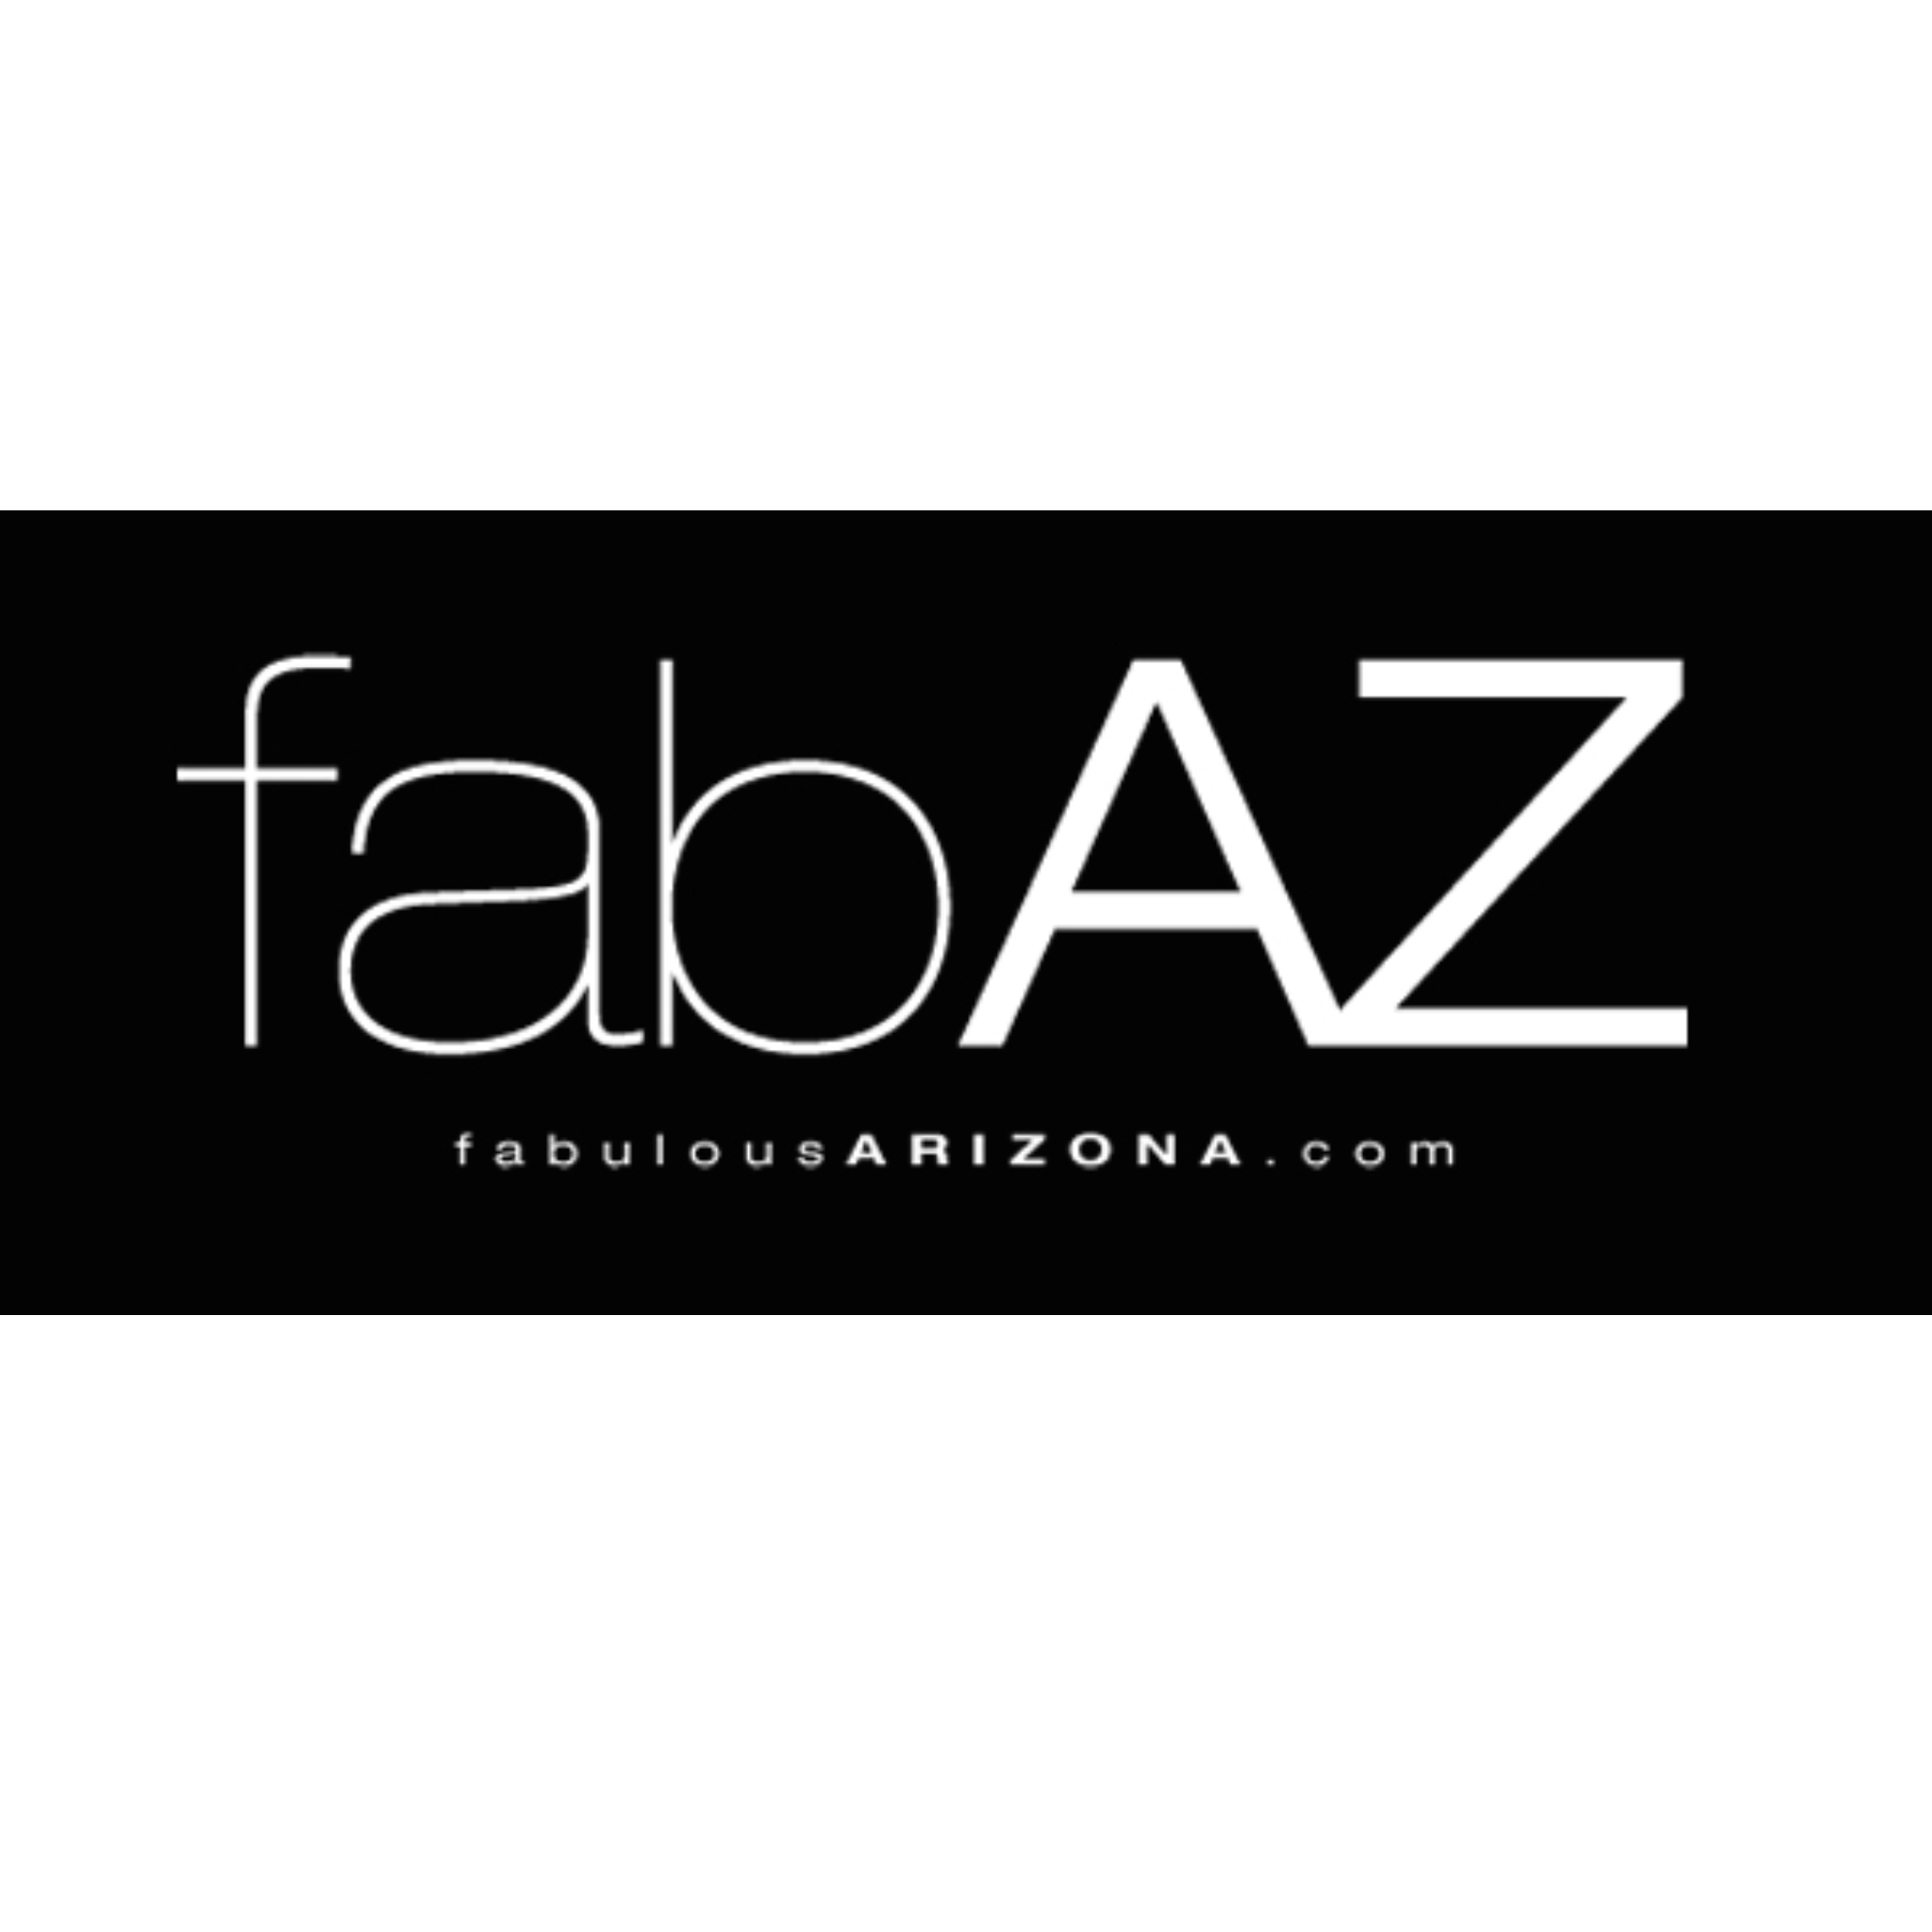 https://fabulousarizona.com/arizona-best/arizonas-flourishing-rose-industry/